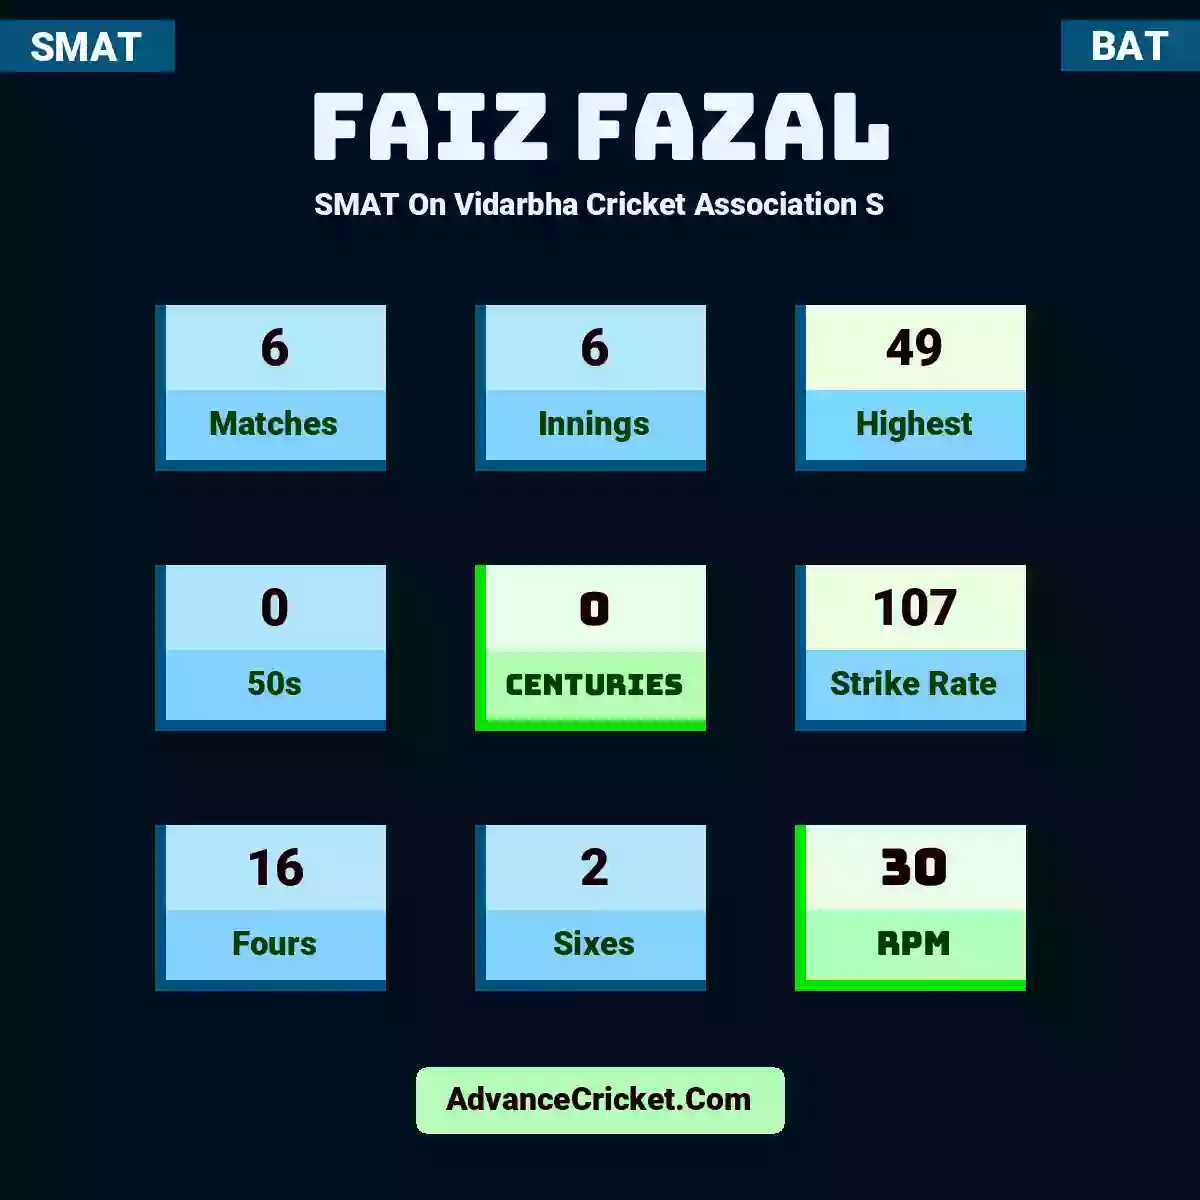 Faiz Fazal SMAT  On Vidarbha Cricket Association S, Faiz Fazal played 6 matches, scored 49 runs as highest, 0 half-centuries, and 0 centuries, with a strike rate of 107. F.Fazal hit 16 fours and 2 sixes, with an RPM of 30.